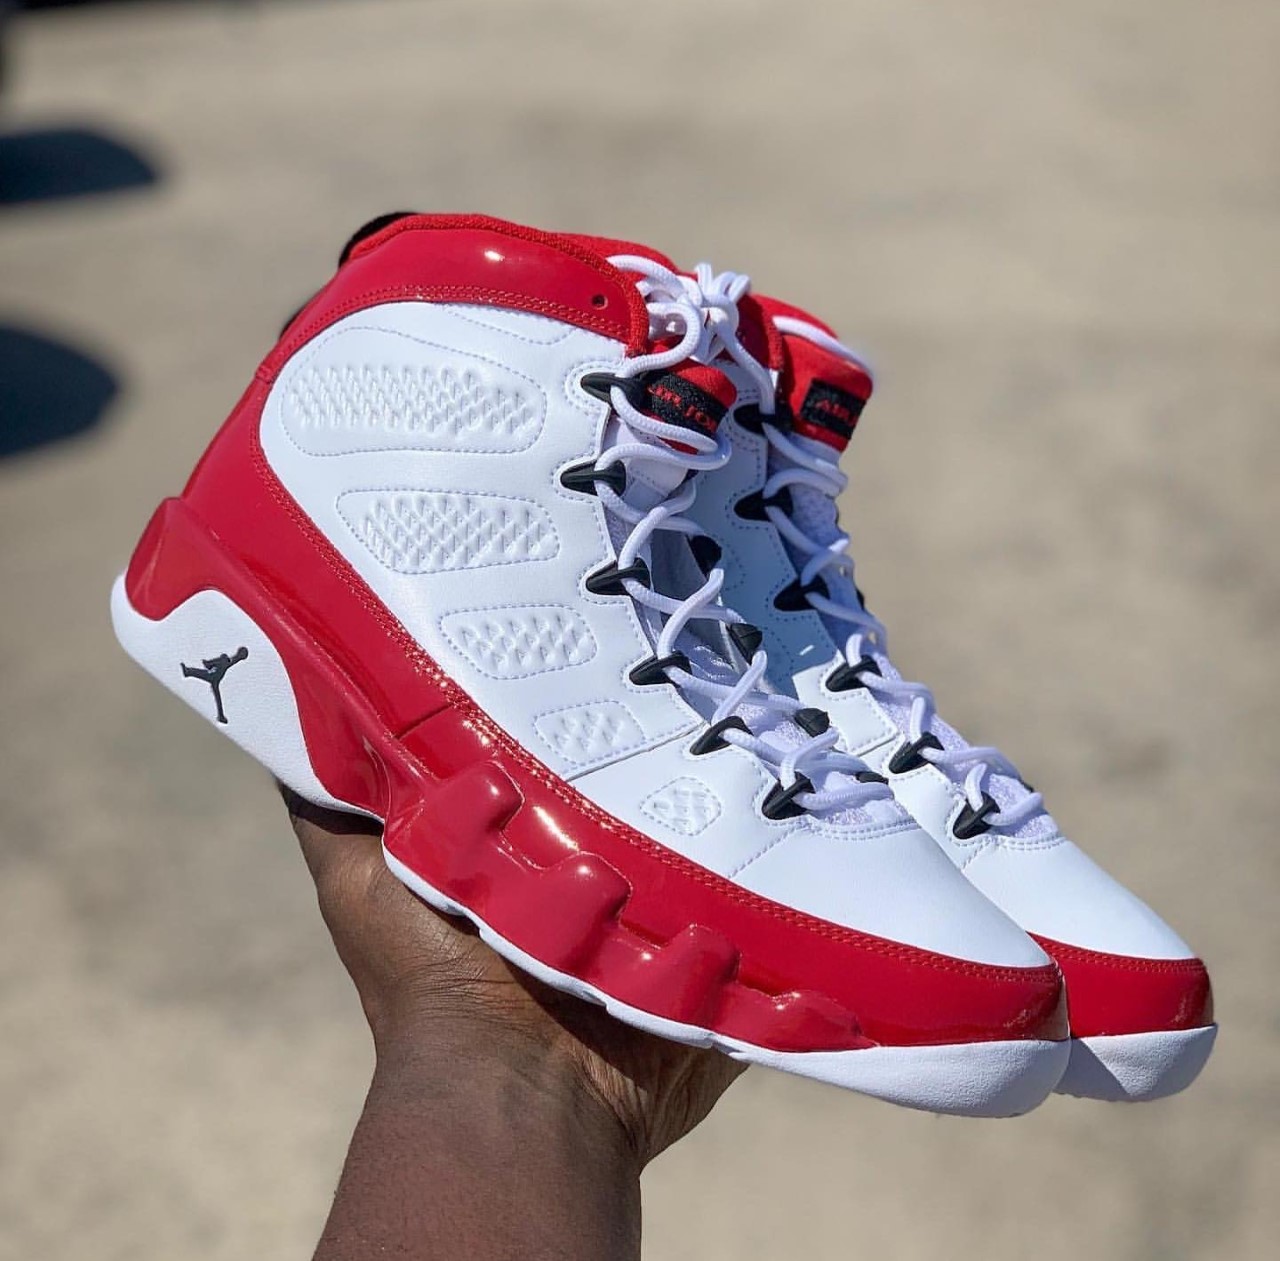 New Look At The Air Jordan 9 “Gym Red”